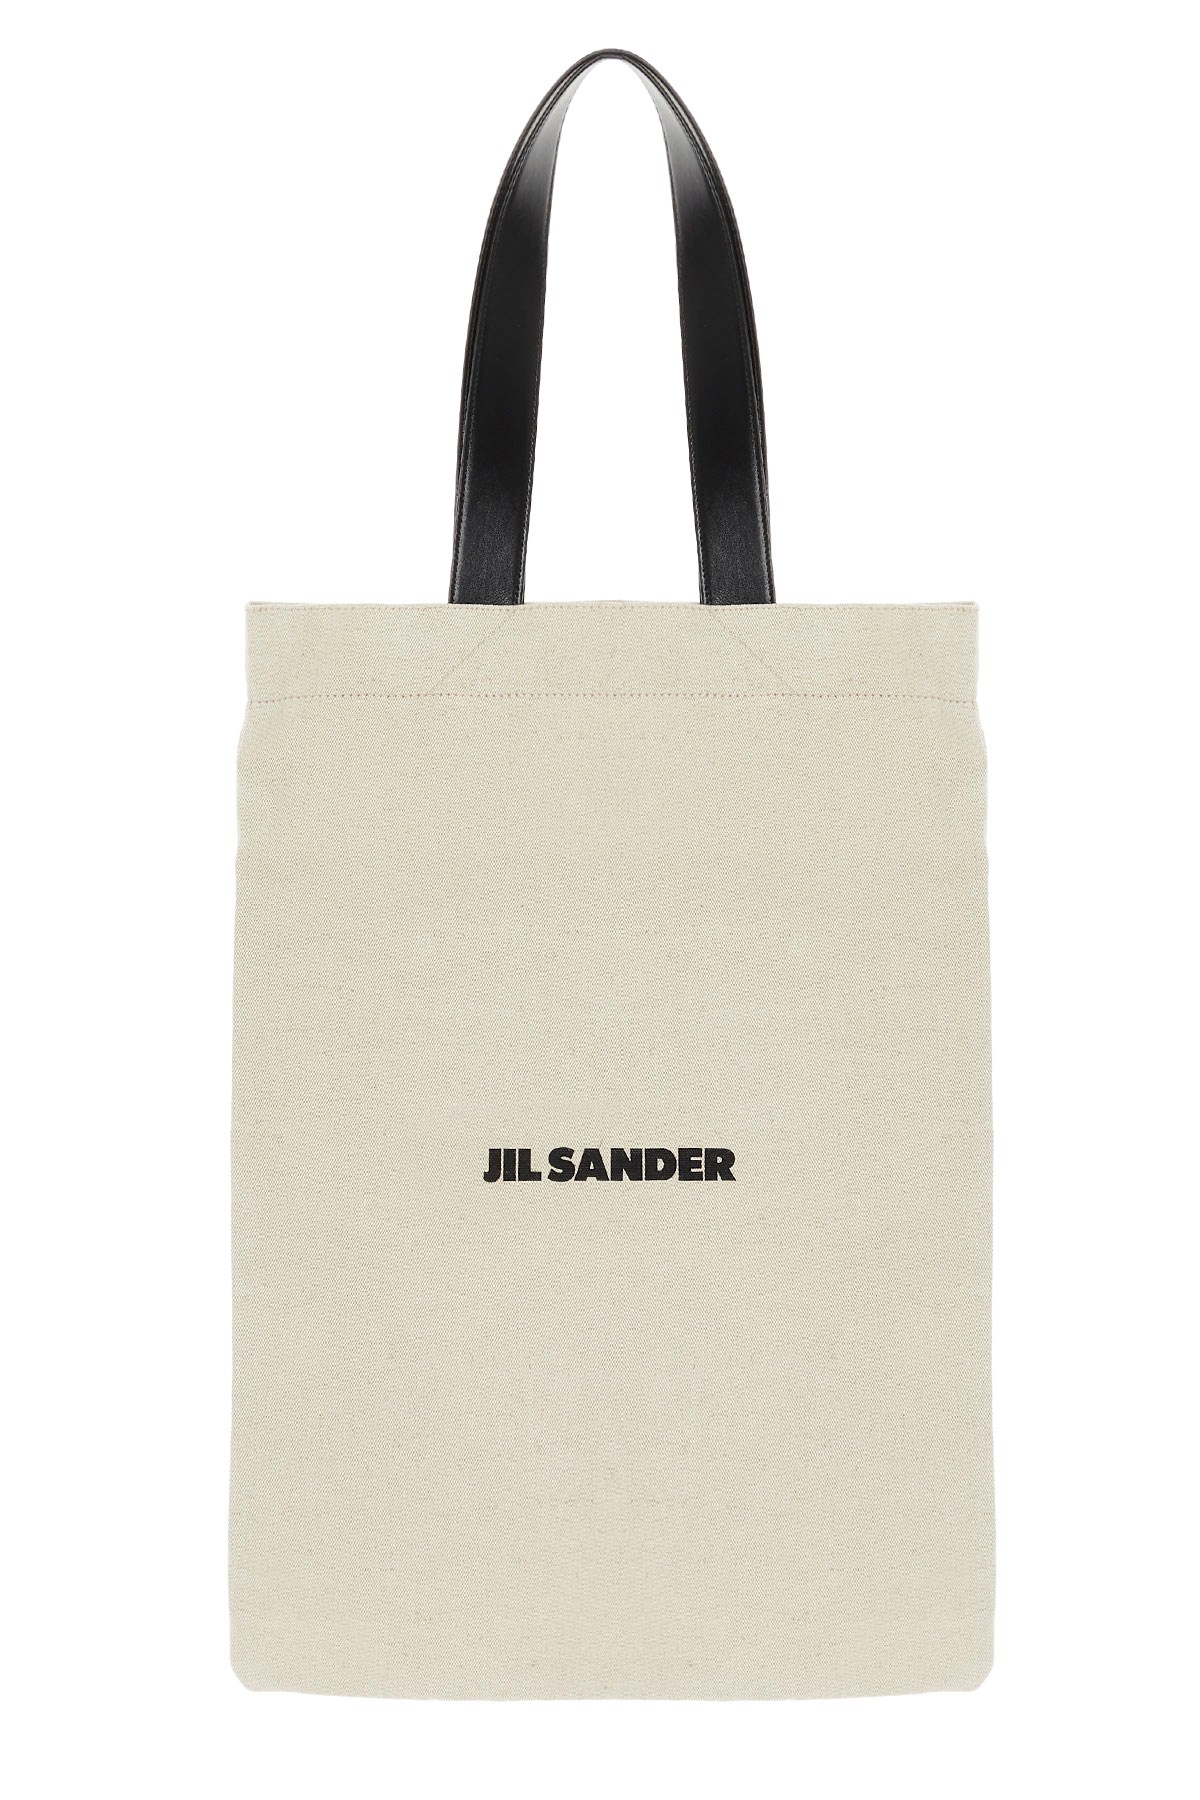 JIL SANDER ‘Flat' Large Shopping Bag